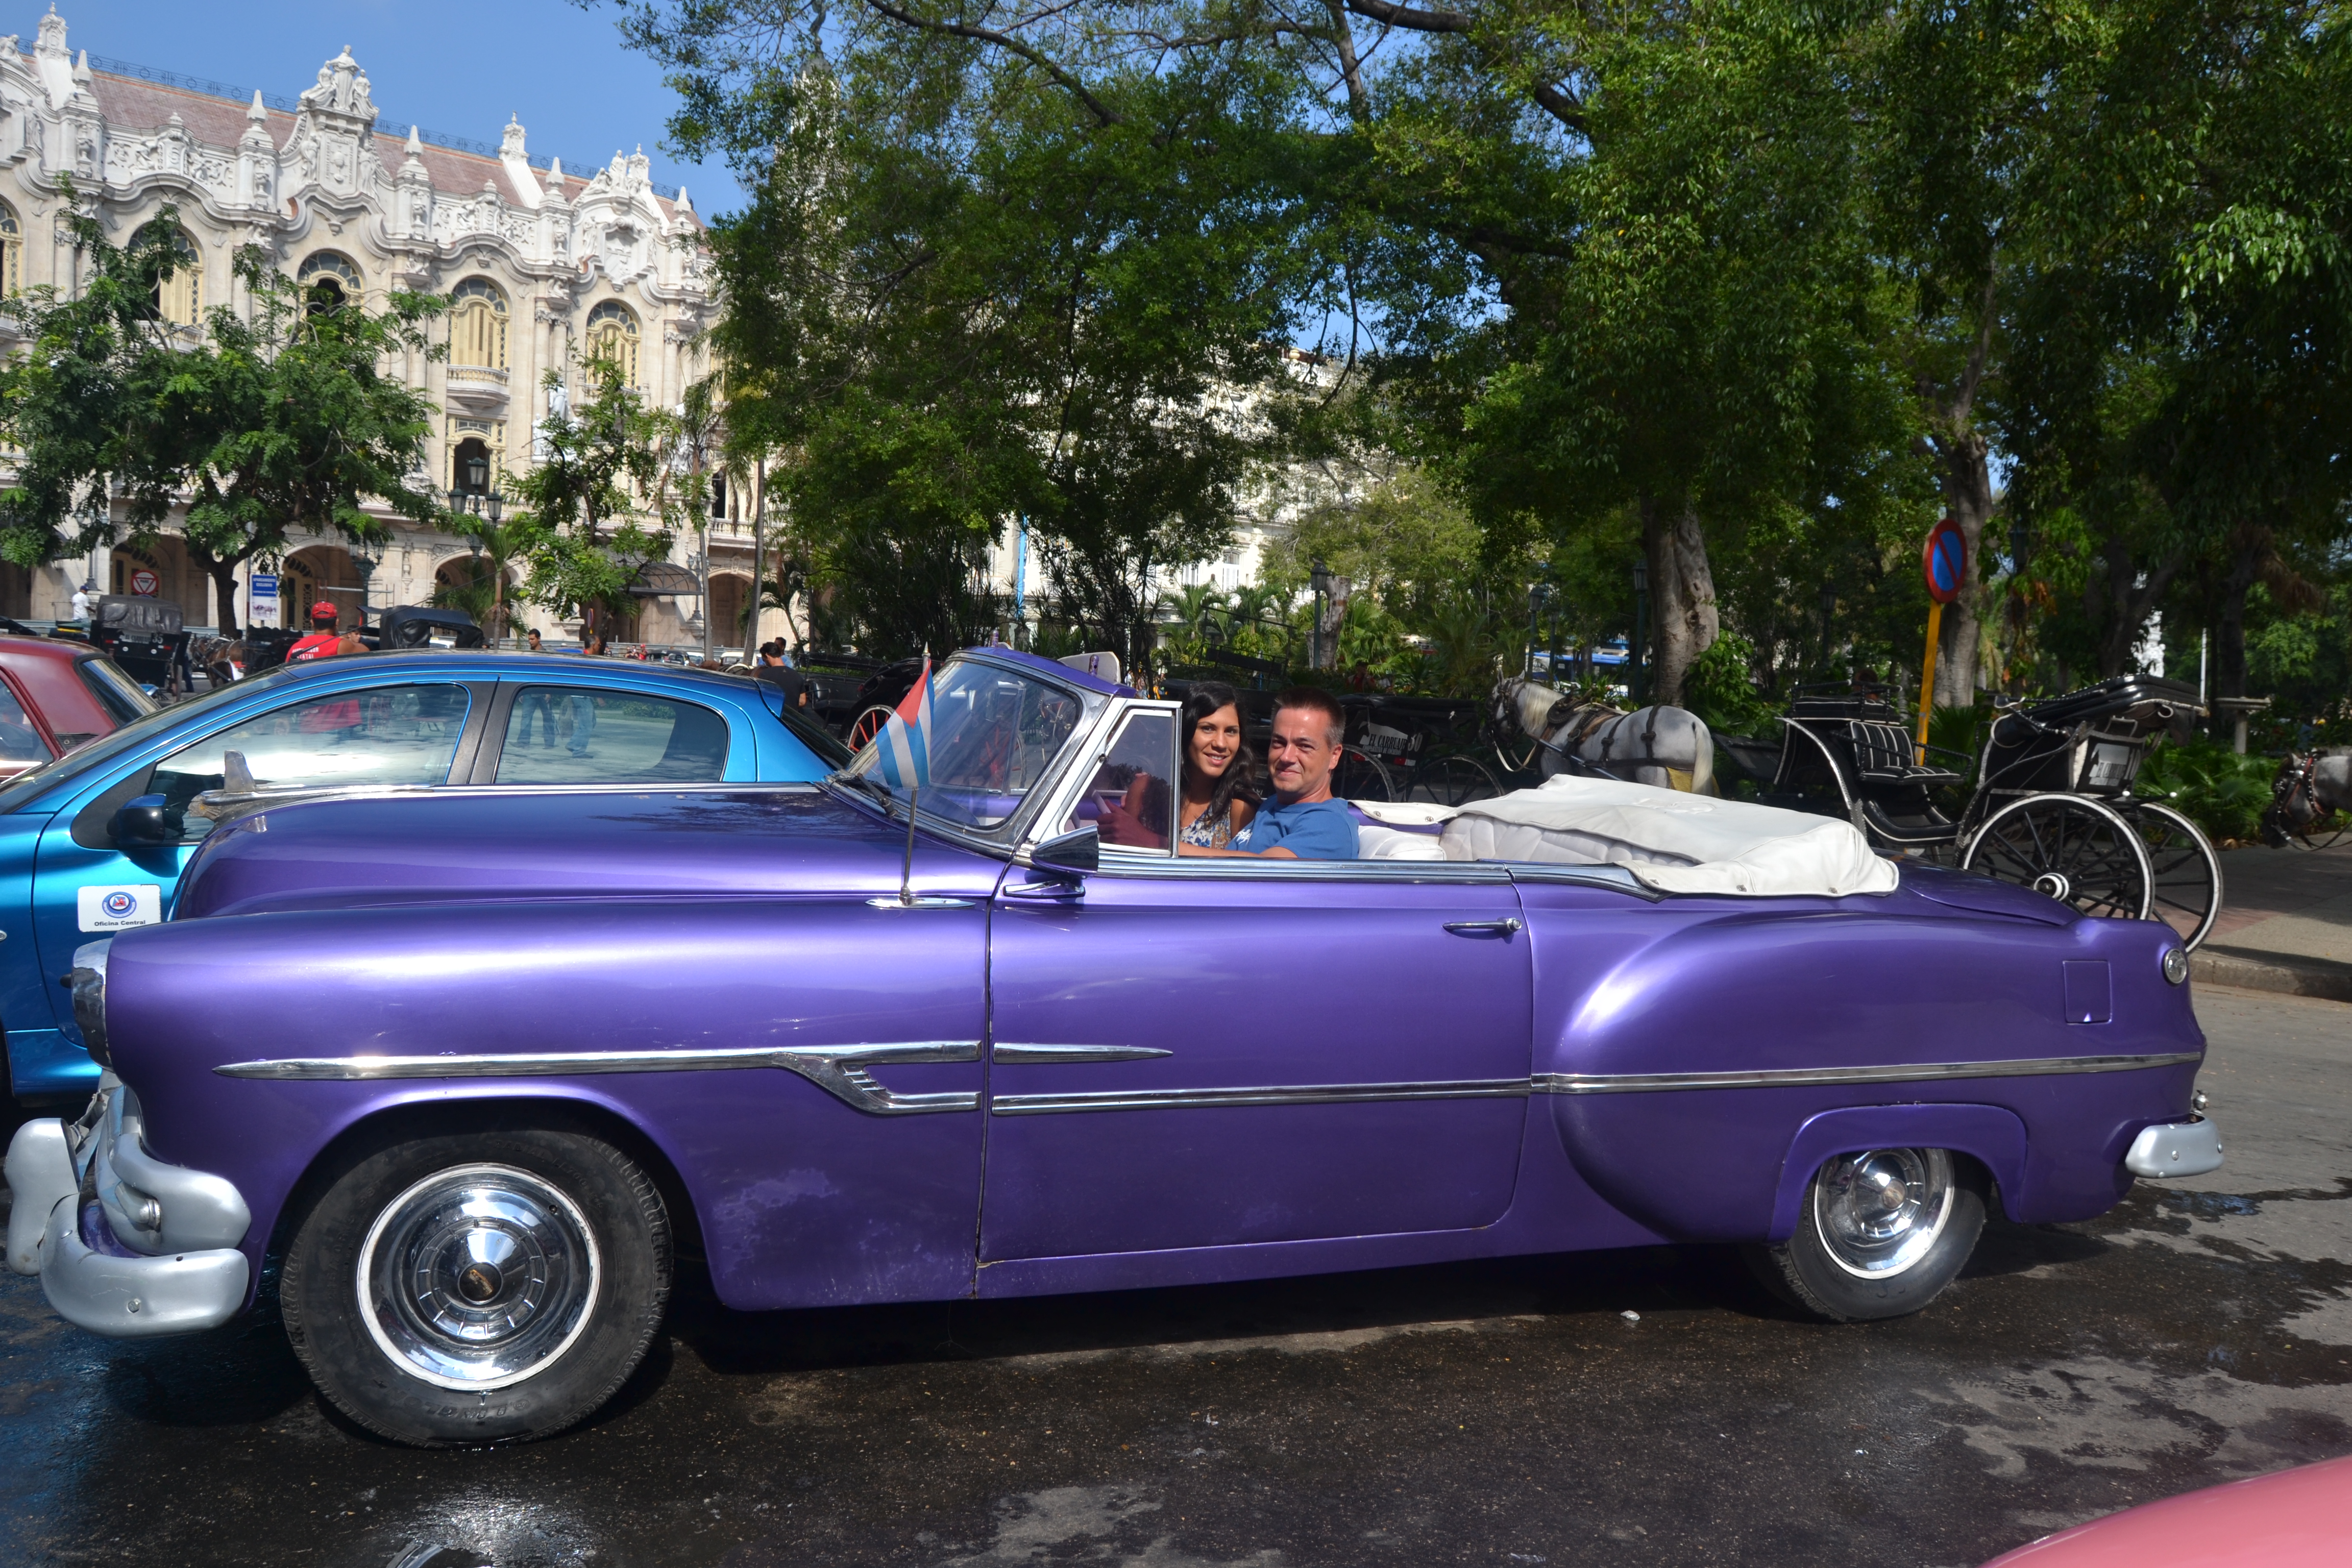 Paseo Descapotable - Pontiac 52, La Habana, Cuba